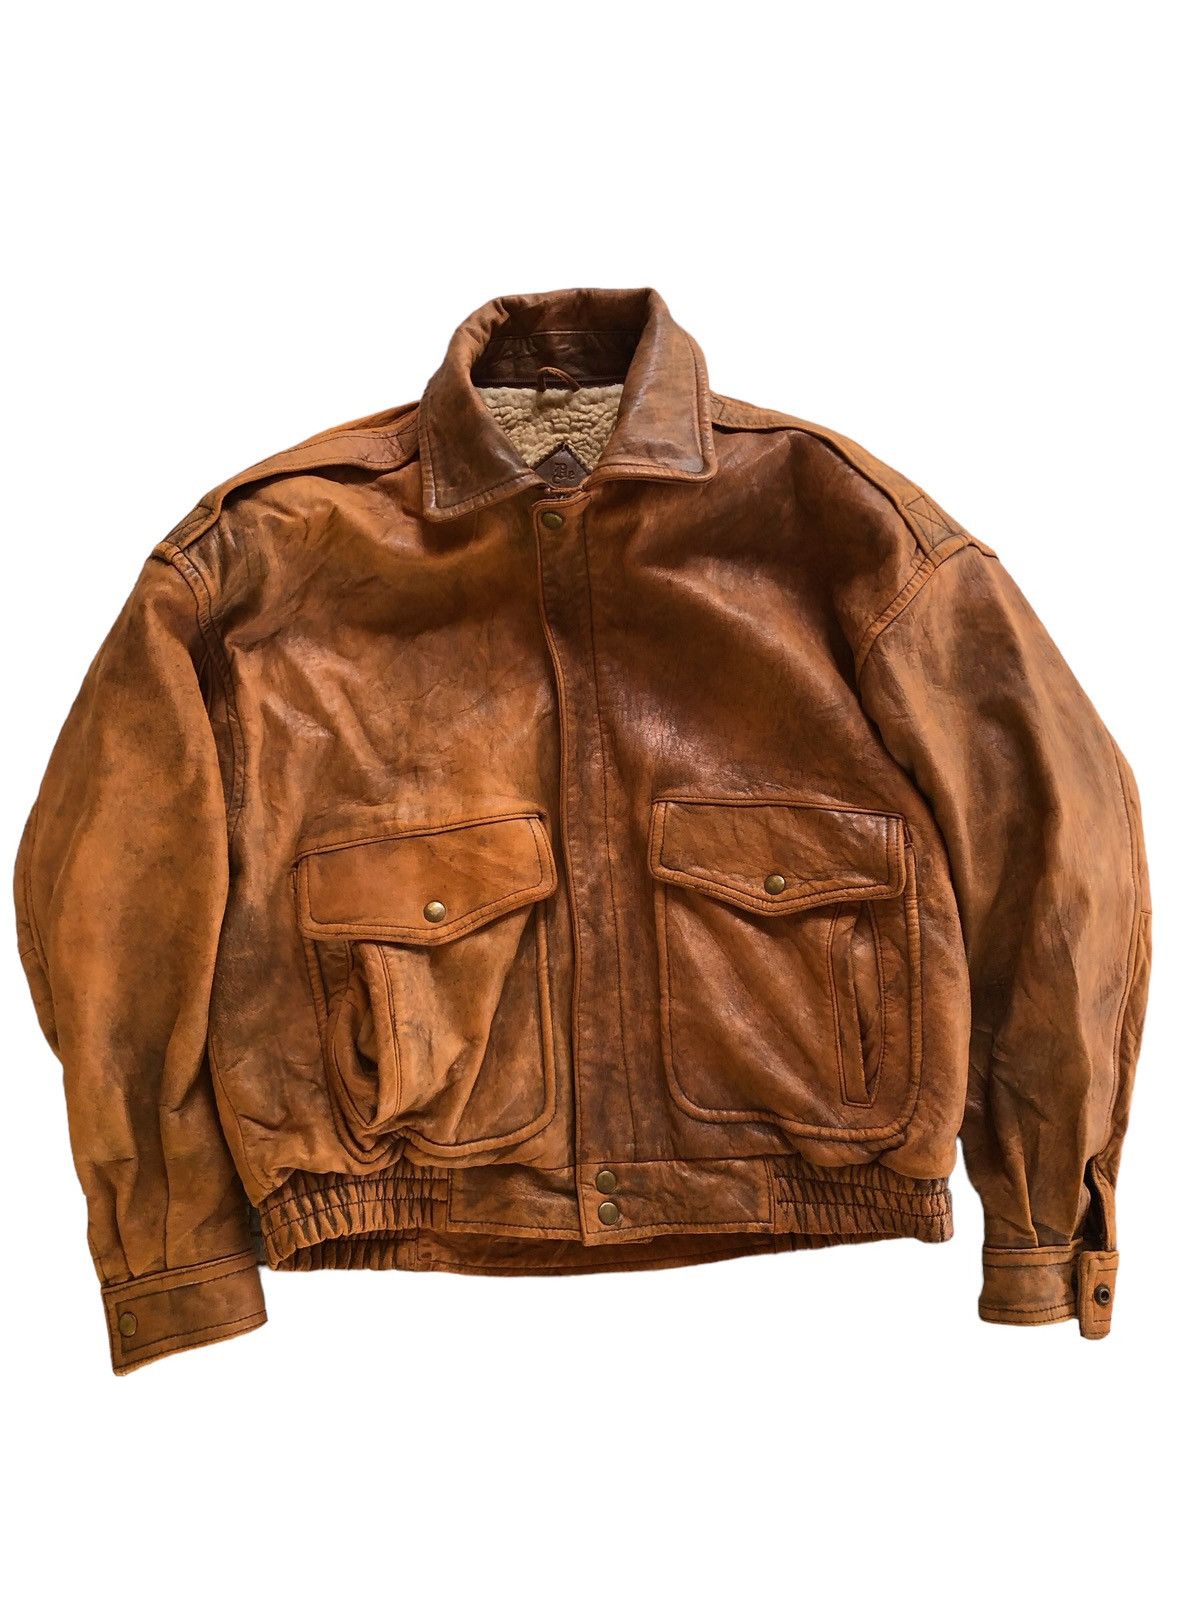 Japanese Brand 2000s G.O.A - Bono Leather Jacket | Grailed